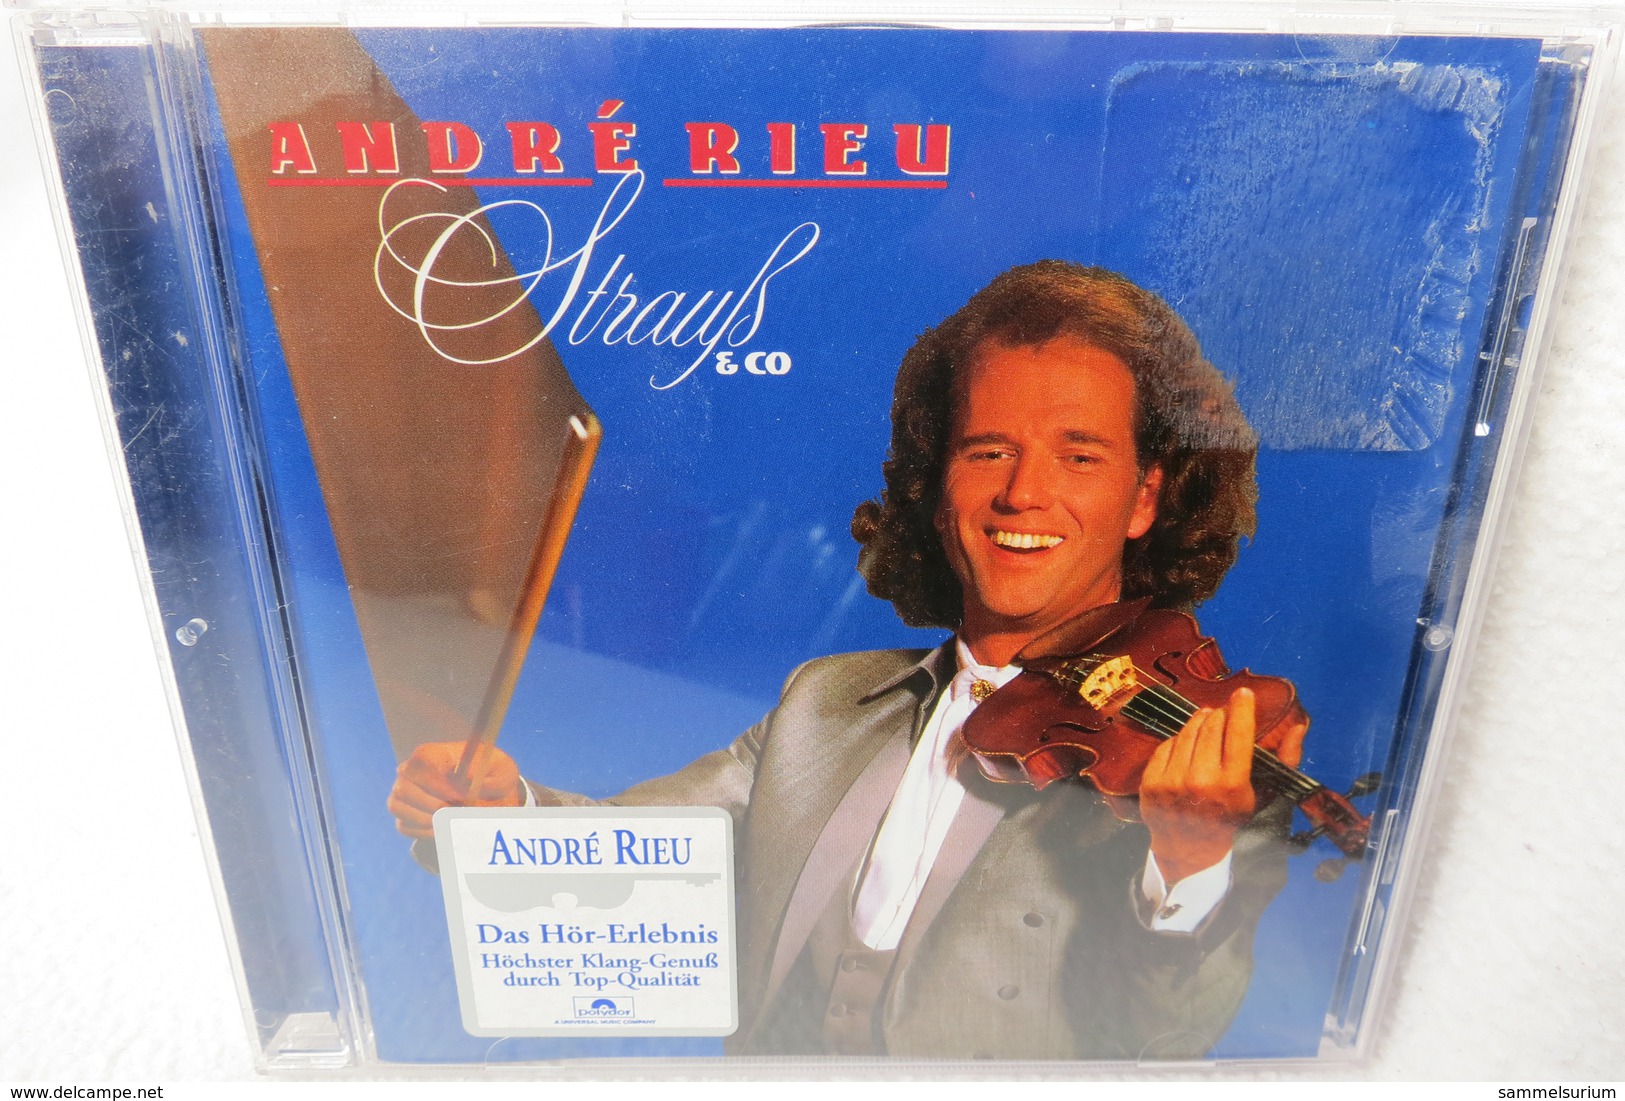 CD "André Rieu" Strauß & Co. - Strumentali